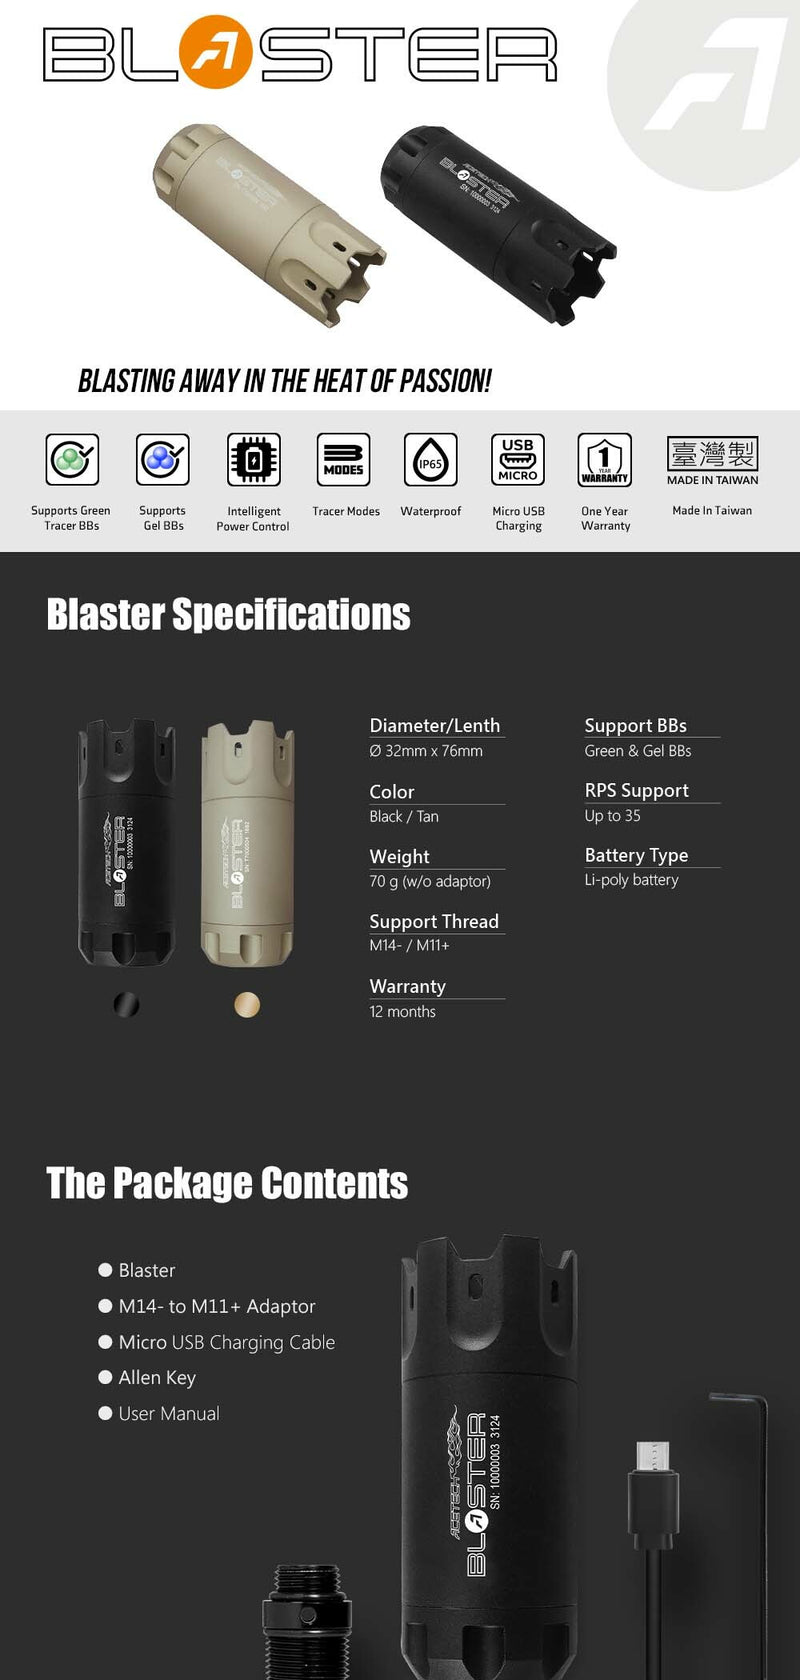 Acetech Brighter BLASTER Tracer unit for Hi-Capa Glock Tokyo Marui We Tech